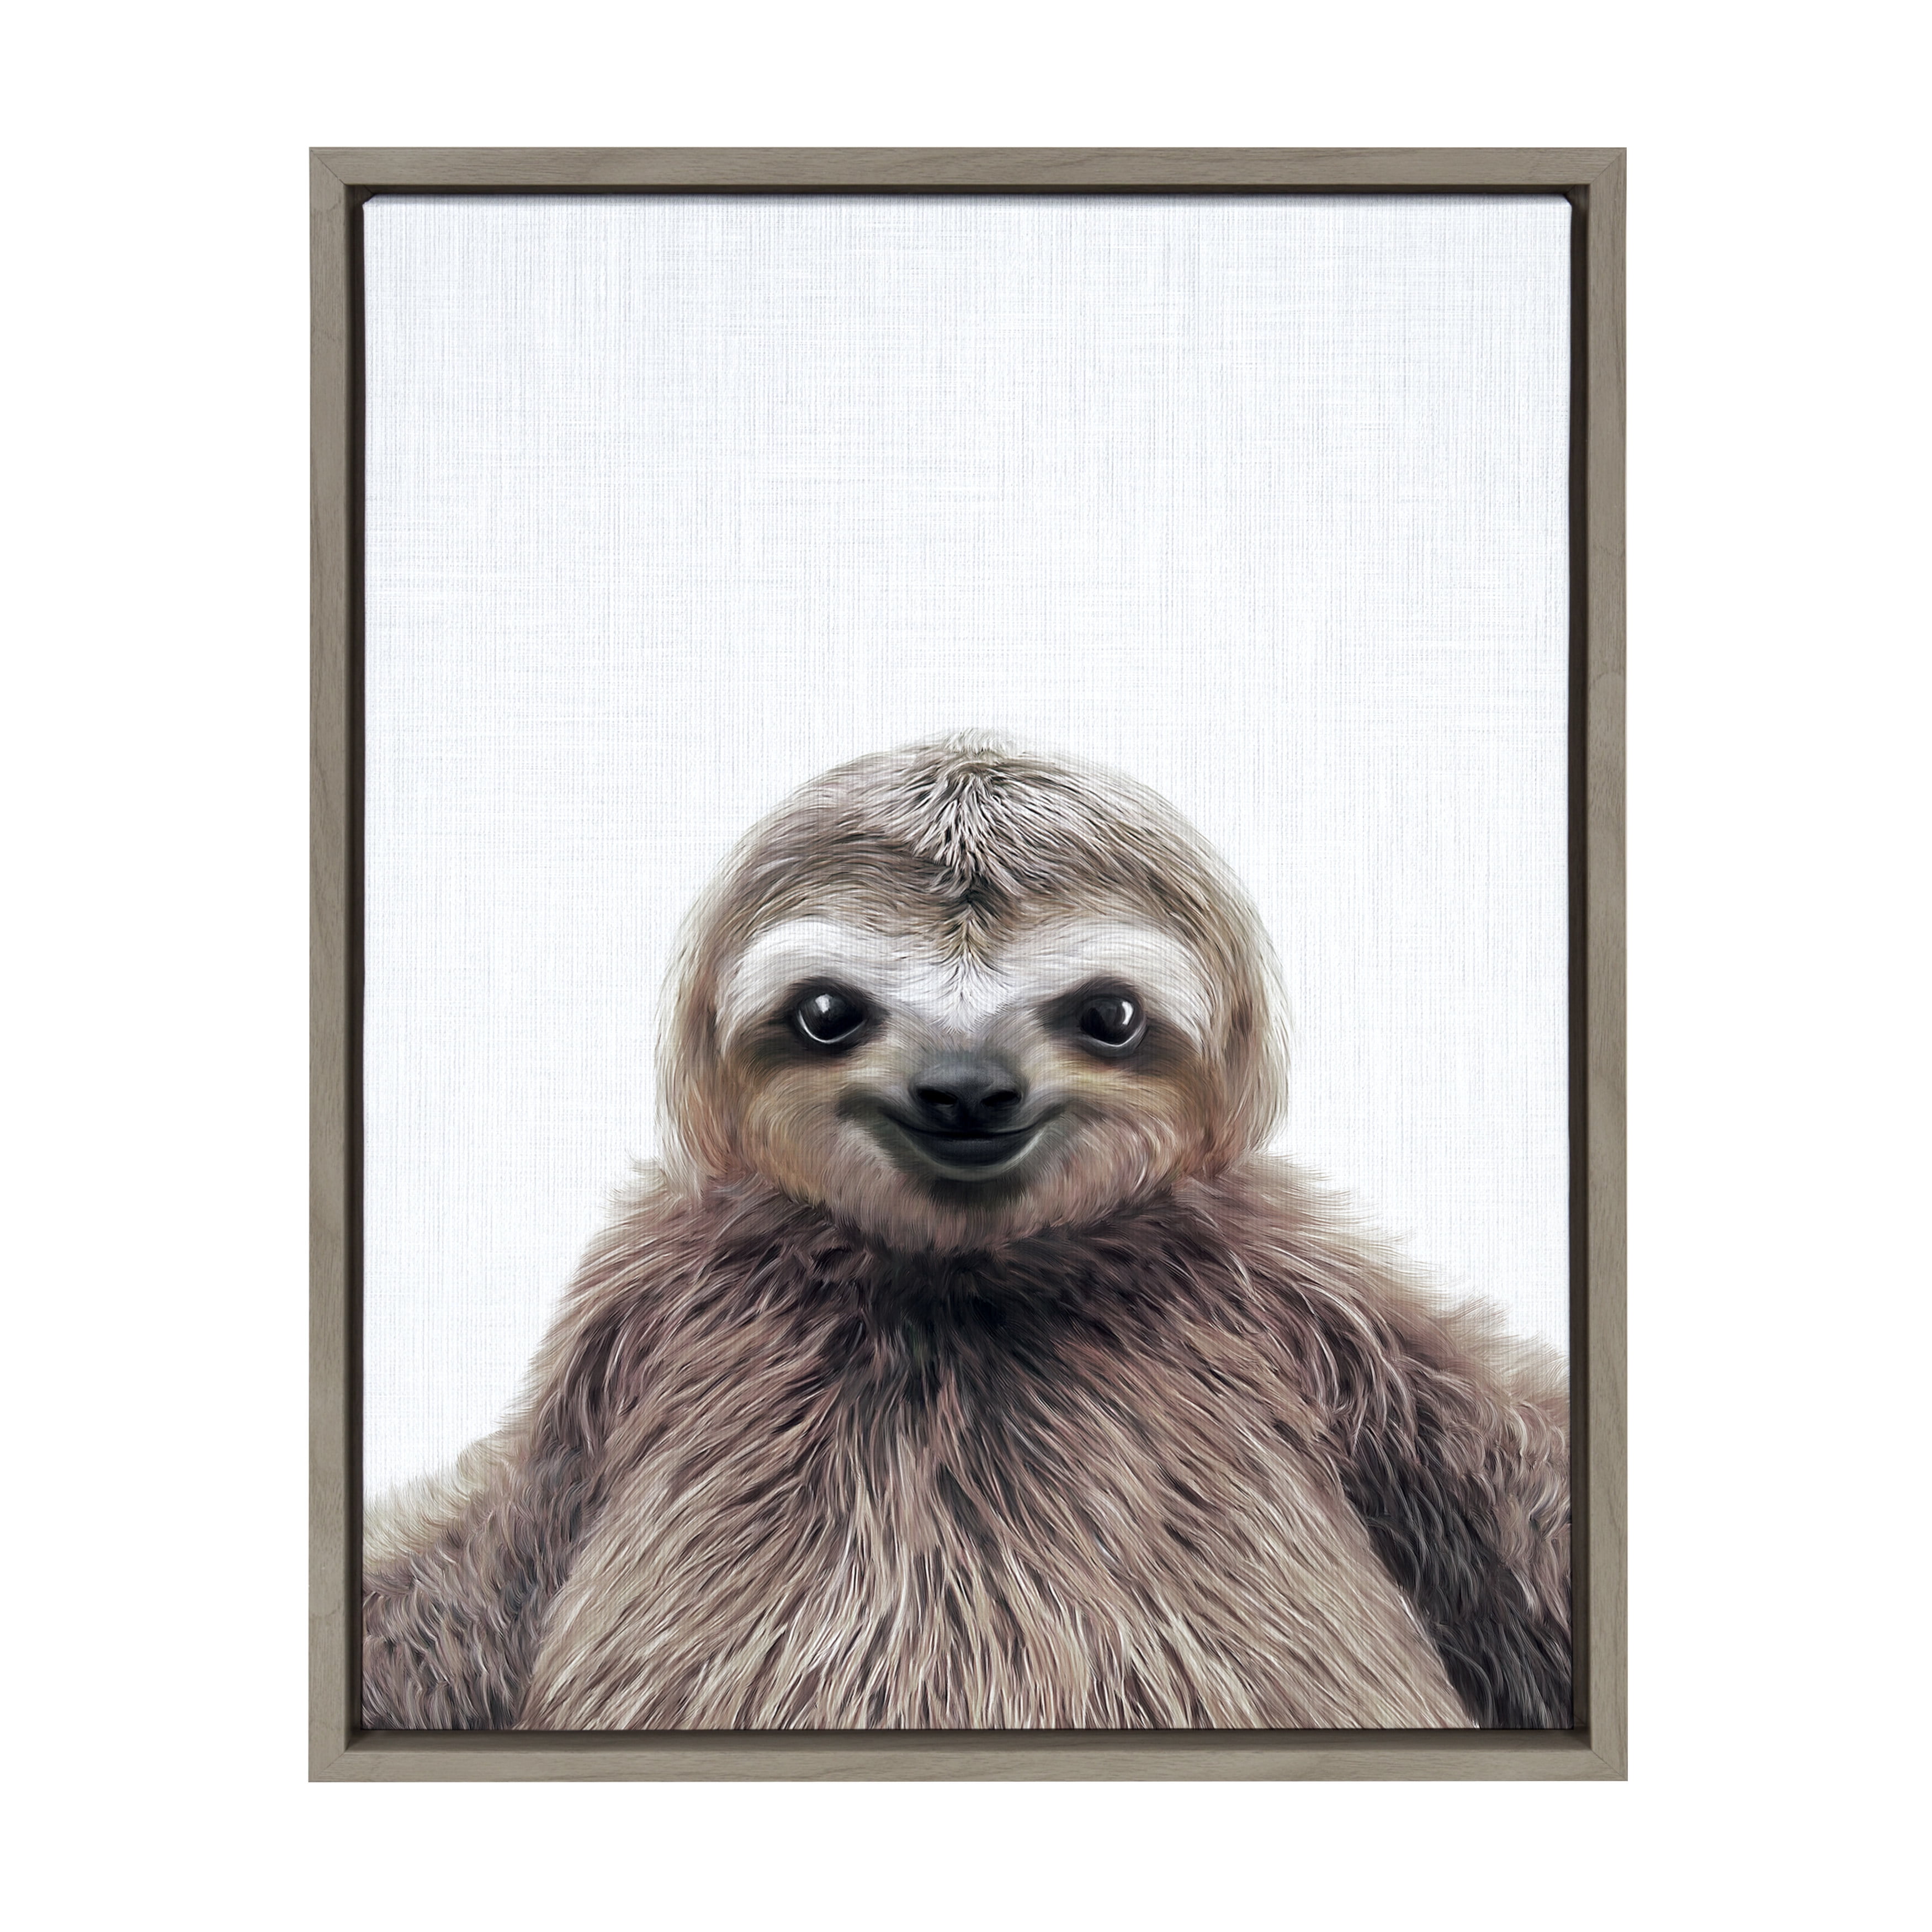 Sloth Print-Sloth-Nursery Decor-Nursery Wall Art-Succulent-Succulent Print-Cactus-Cactus Print-Pinata-Sloth Wall Art-Animal Art-Paper Sloth